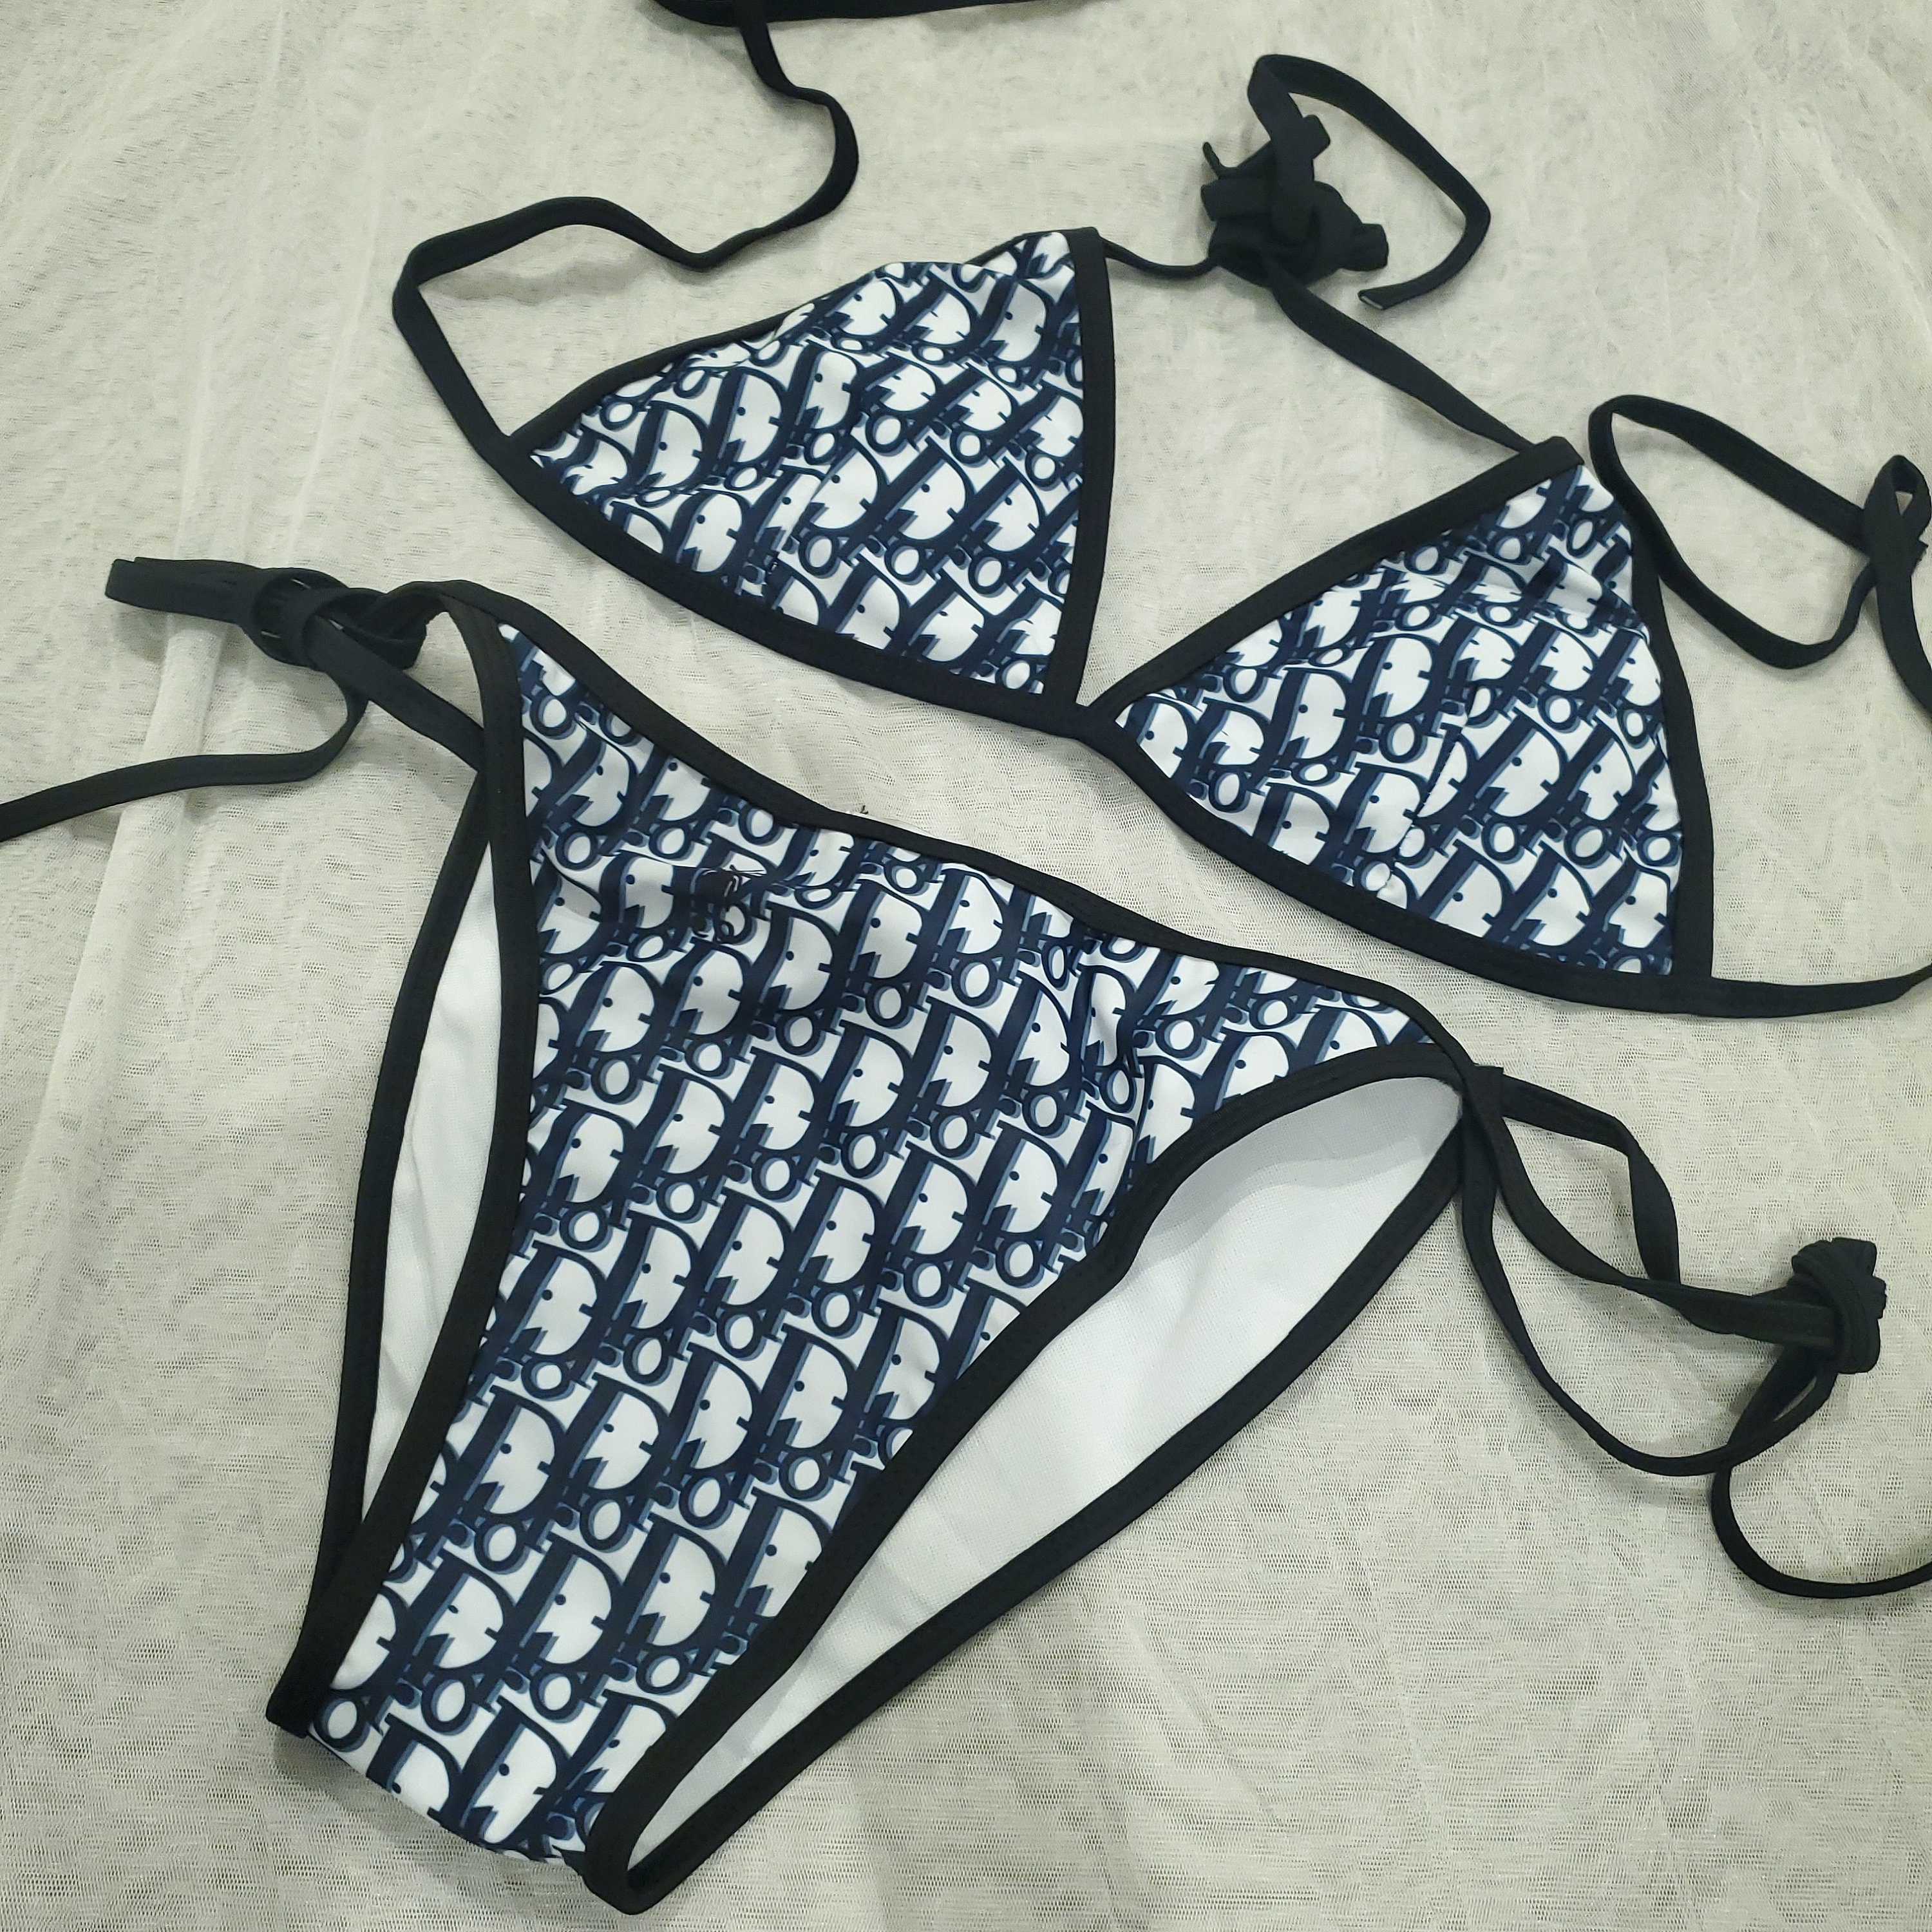 Christian Dior swimsuit bikini in size M monogram Brown Light